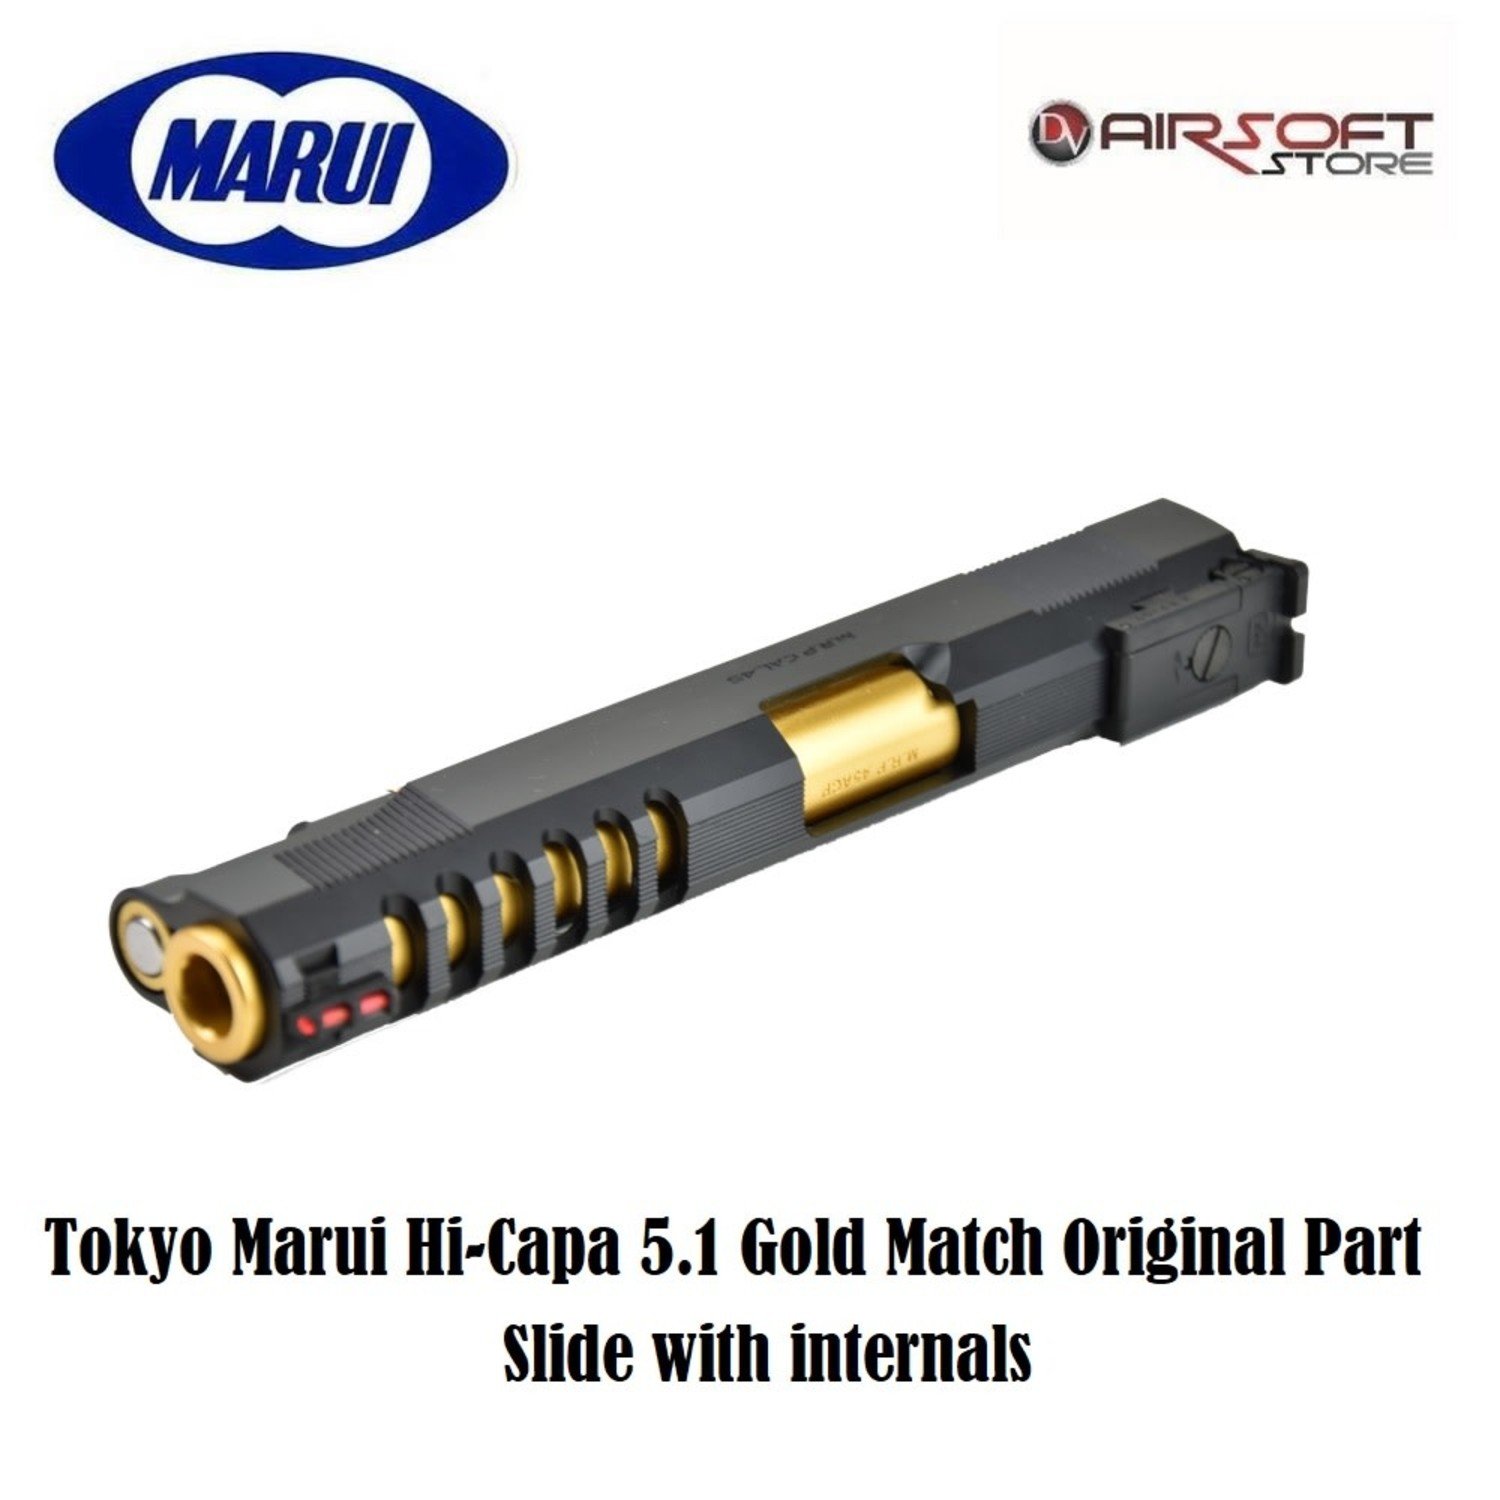 Tokyo Marui Hi-Capa 5.1 Gold Match Original Part Slide with internals -  Airsoft Store